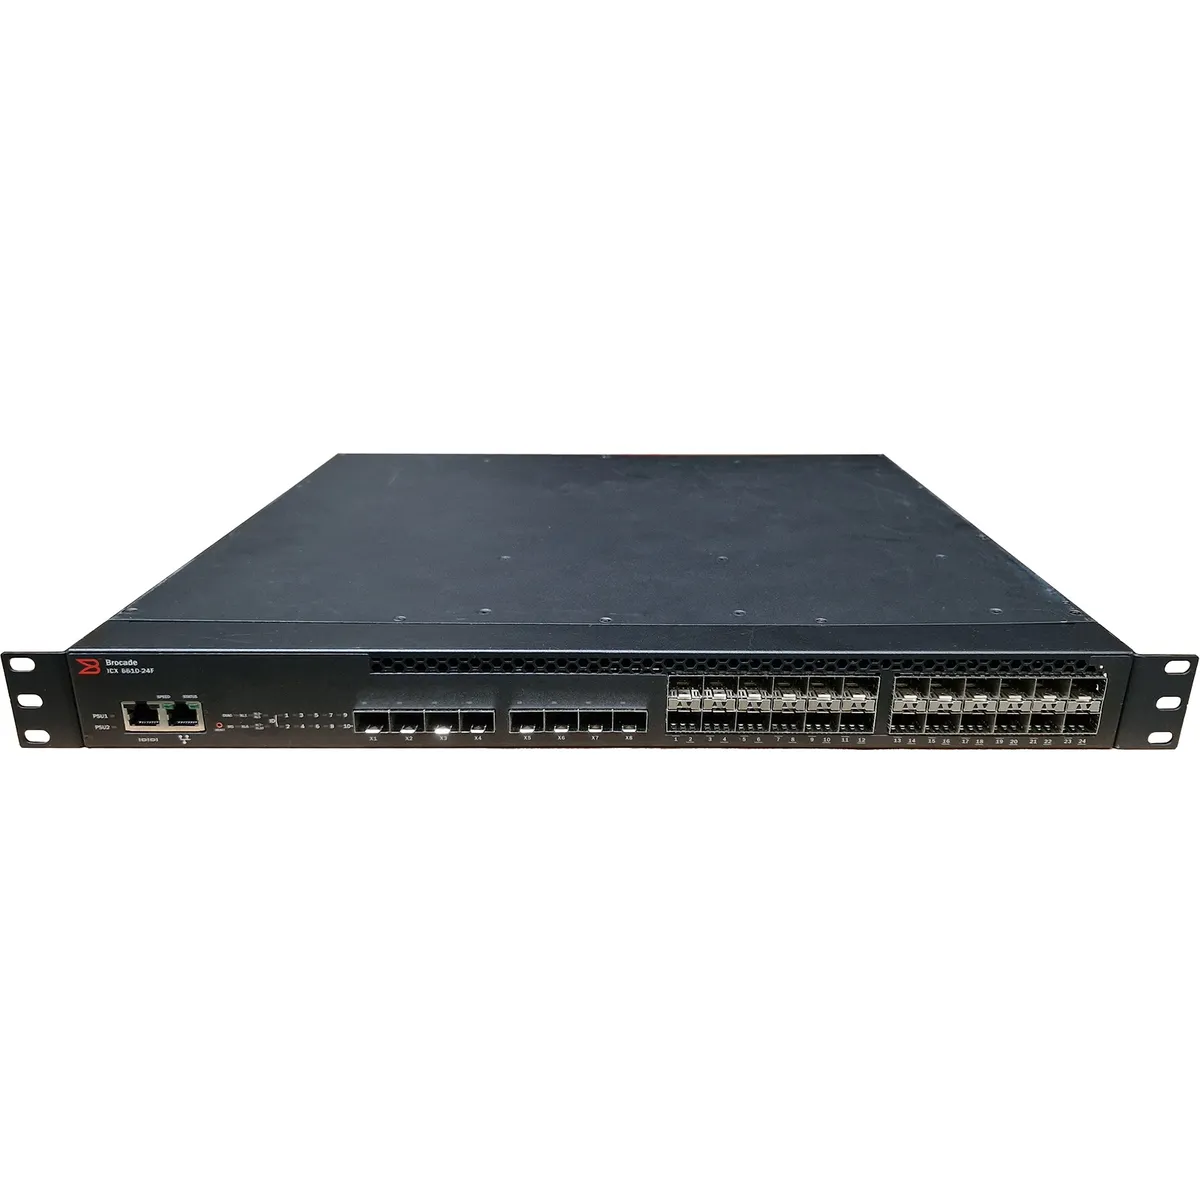 Brocade ICX 6610-24F-E 24xSFP 1G Managed Switch